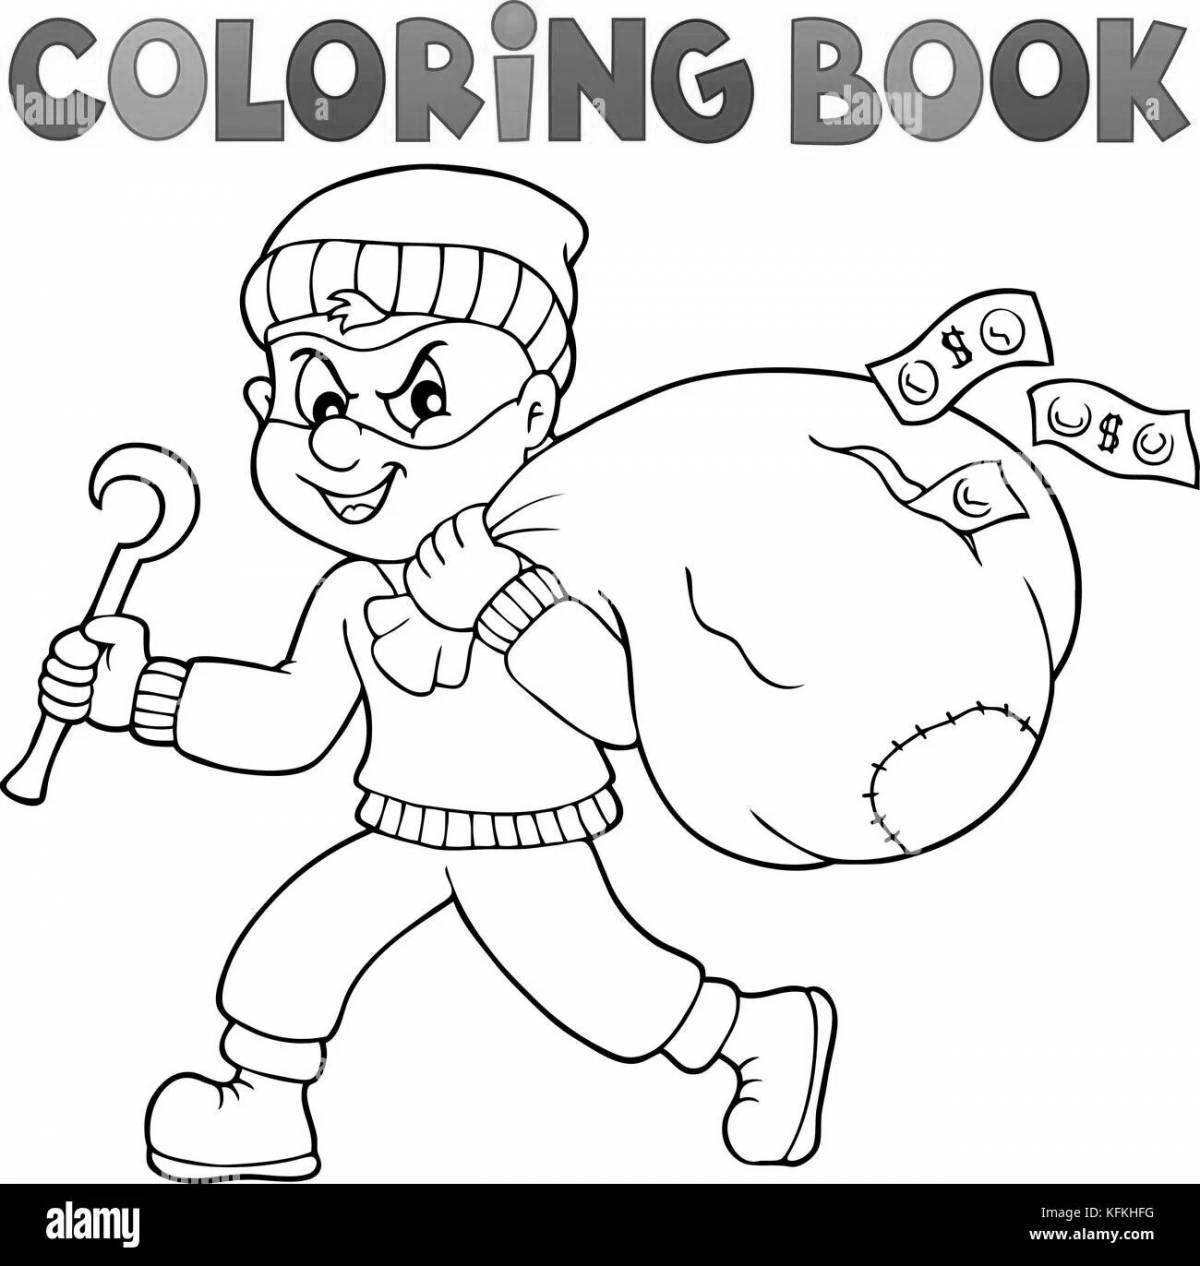 Coloring book tenacious thief